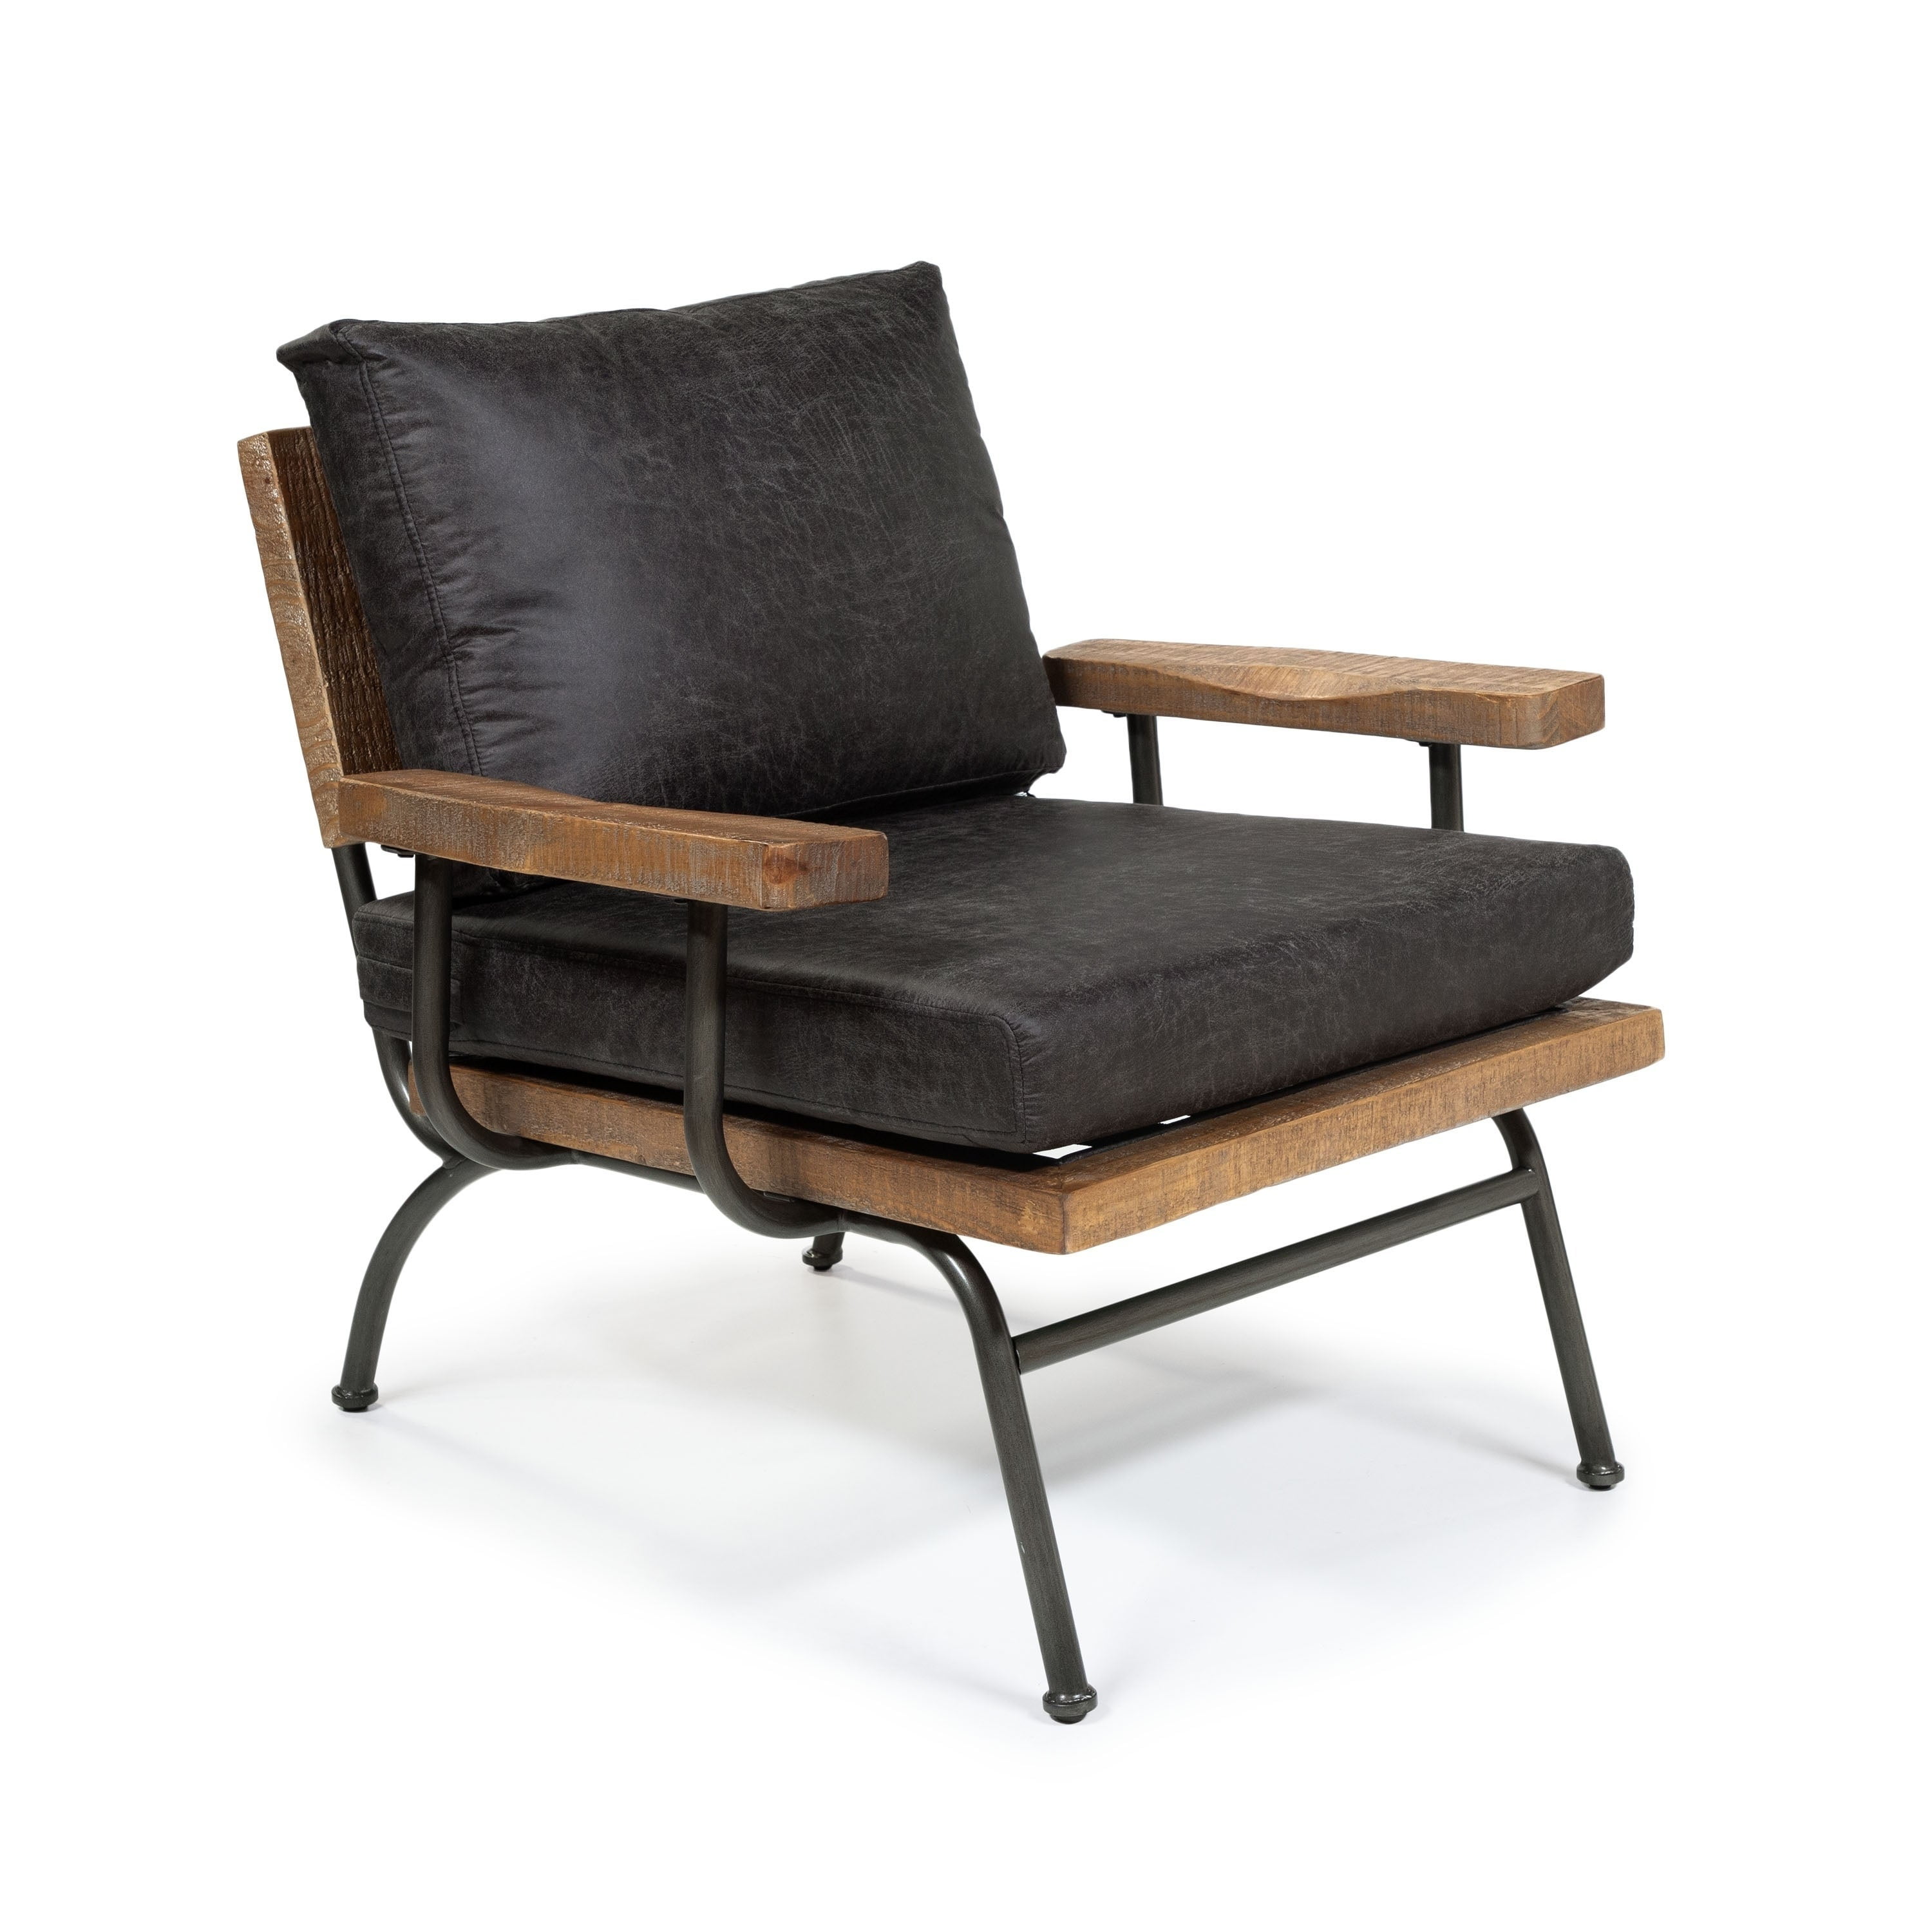 Furniture of America Bice Industrial Accent Chair - Walmart.com ...